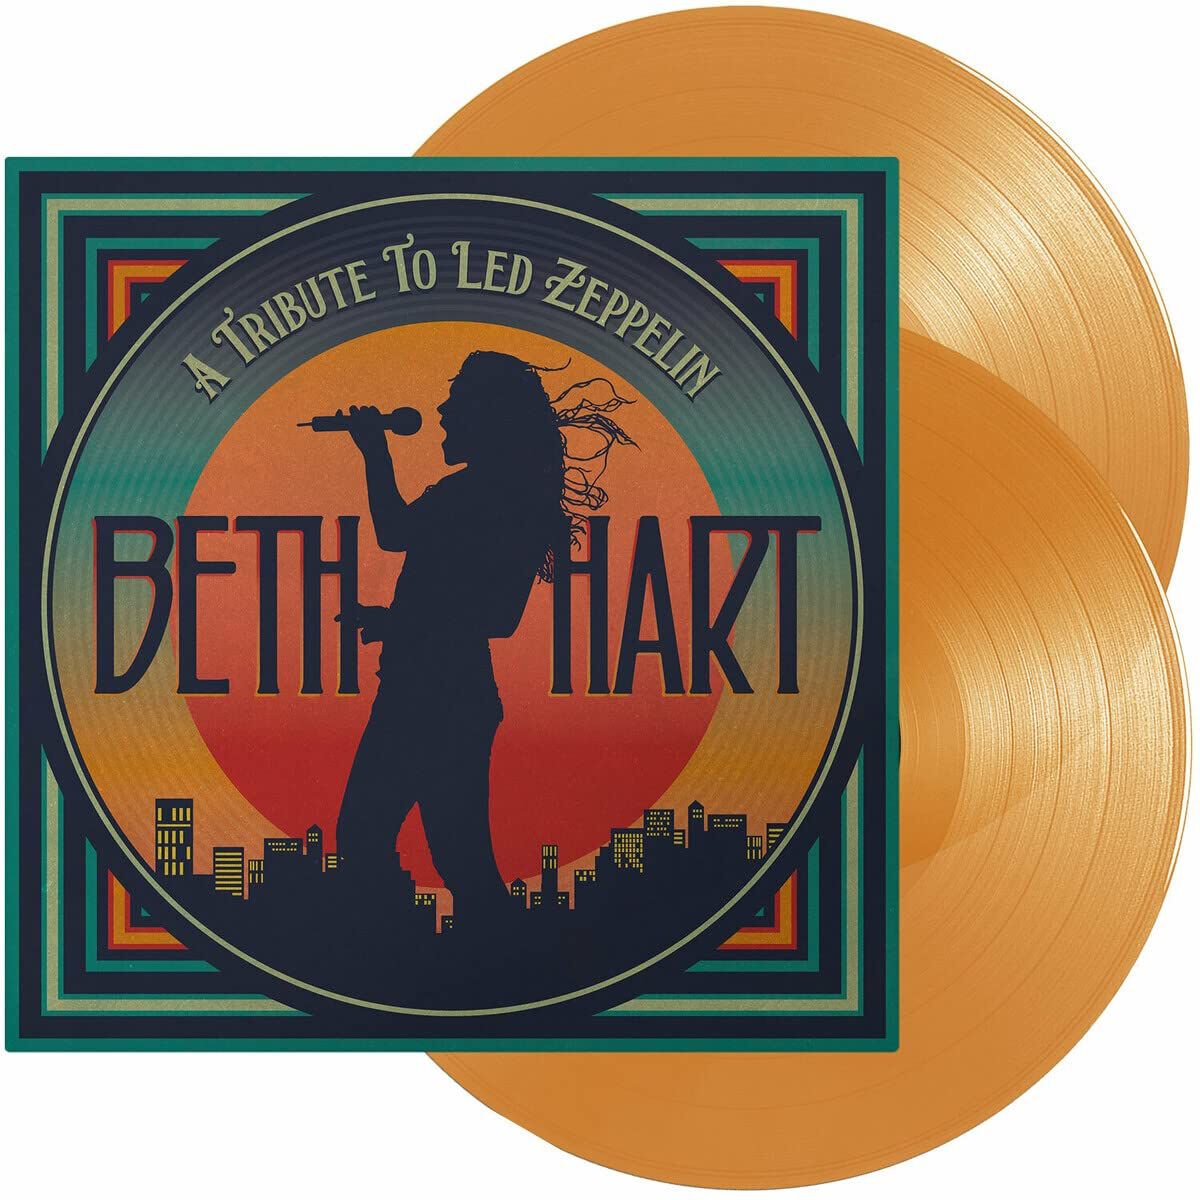 Image of Beth Hart A tribute to Led Zeppelin 2-LP orange